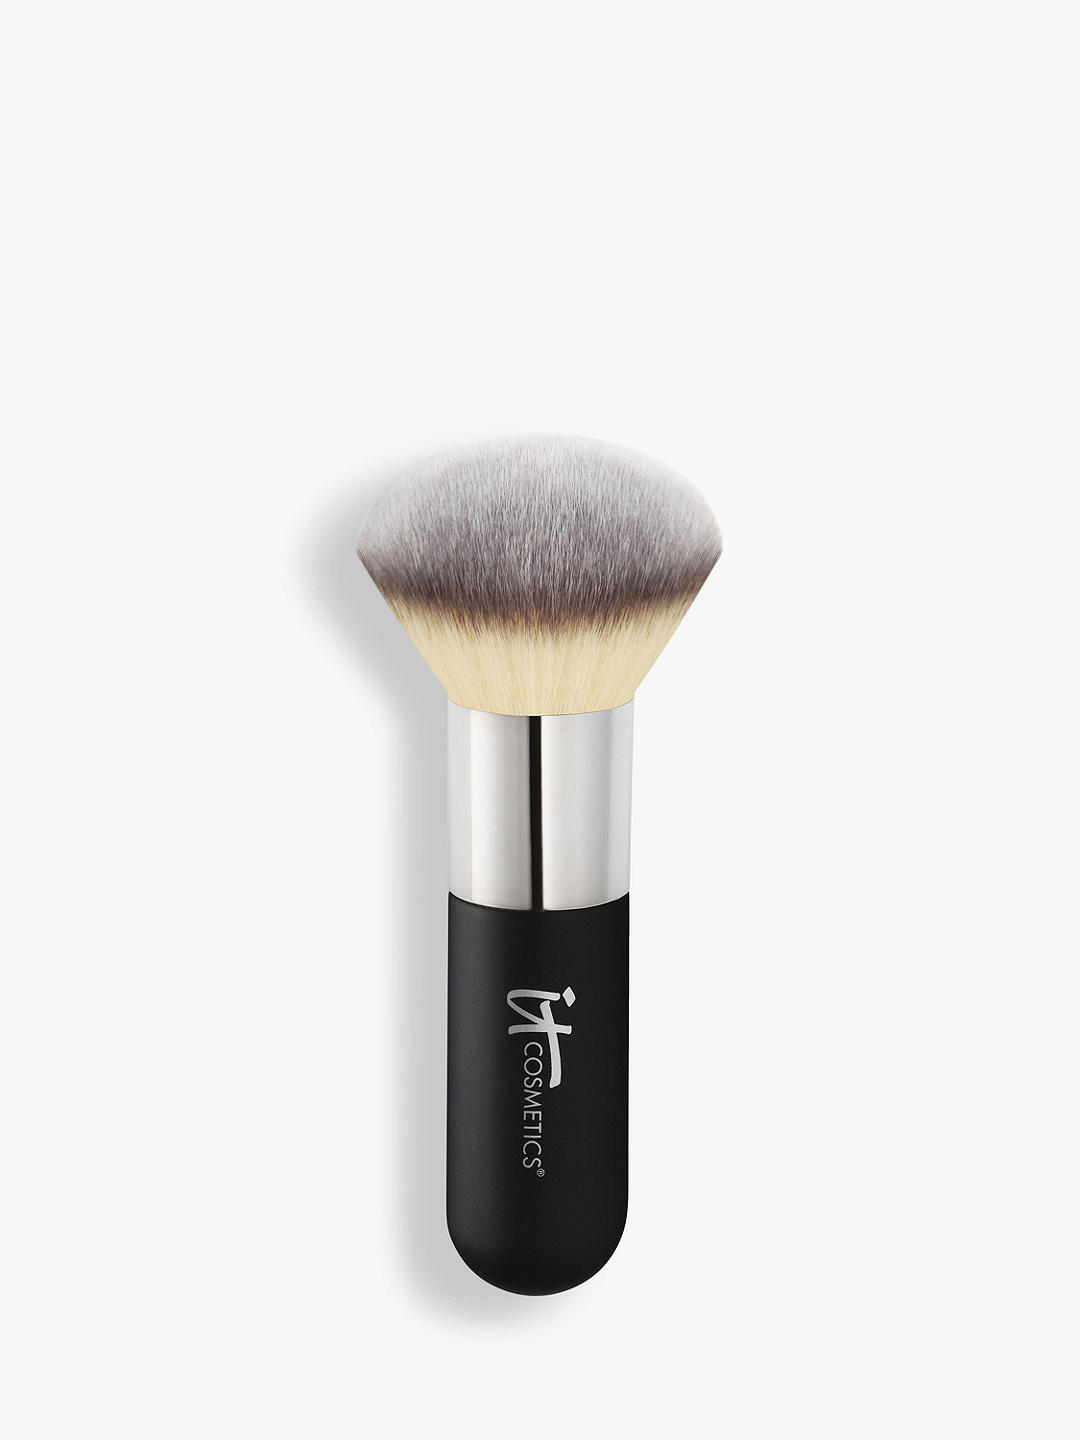 IT Cosmetics Heavenly Luxe Airbrush Powder and Bronzer Brush #1 1